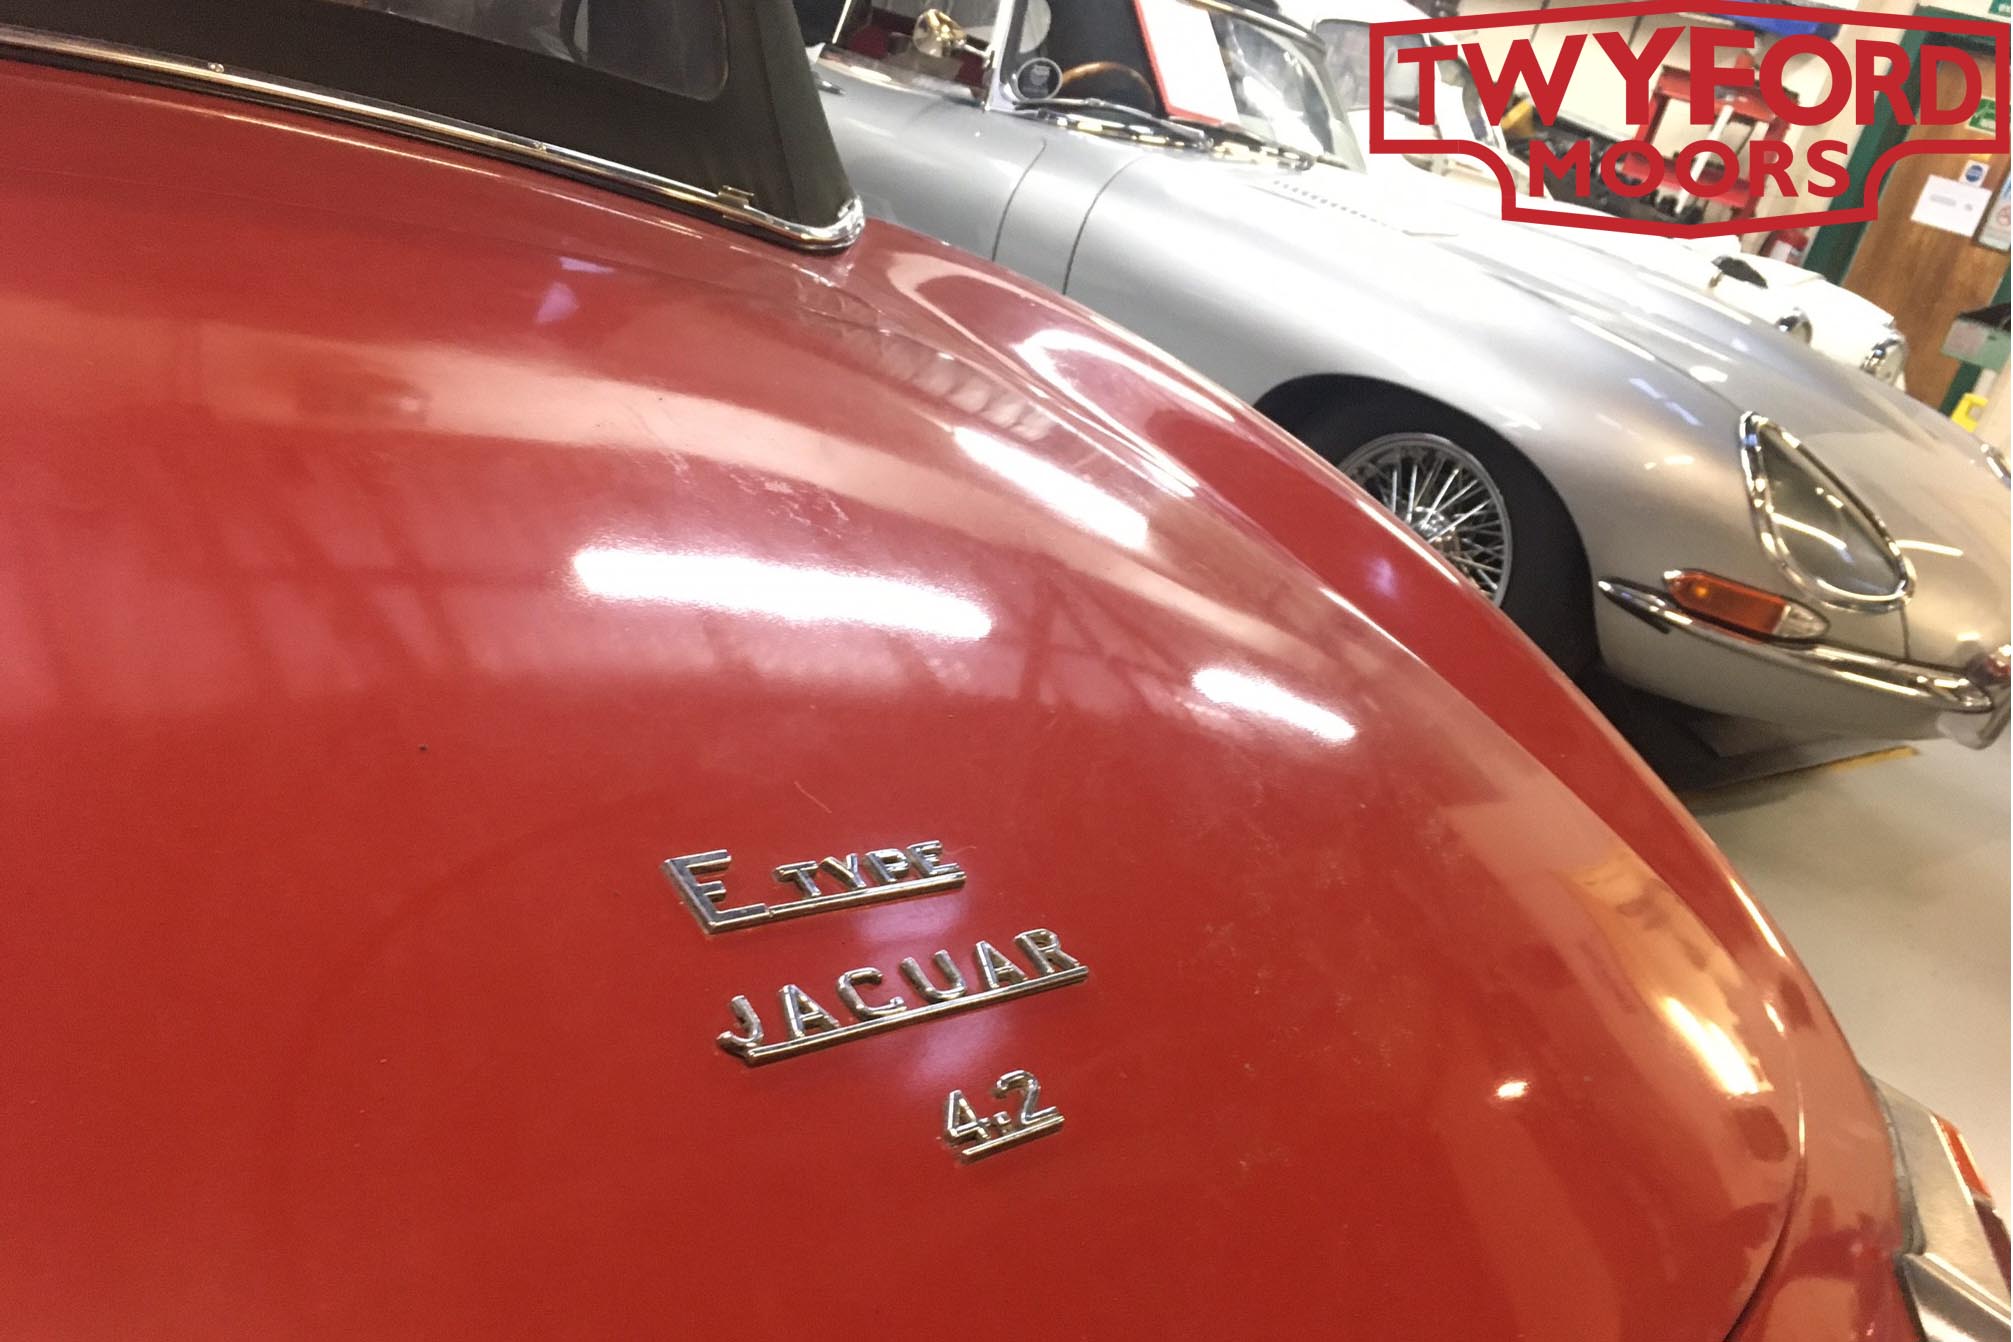 Jaguar E-Type in Hampshire garage